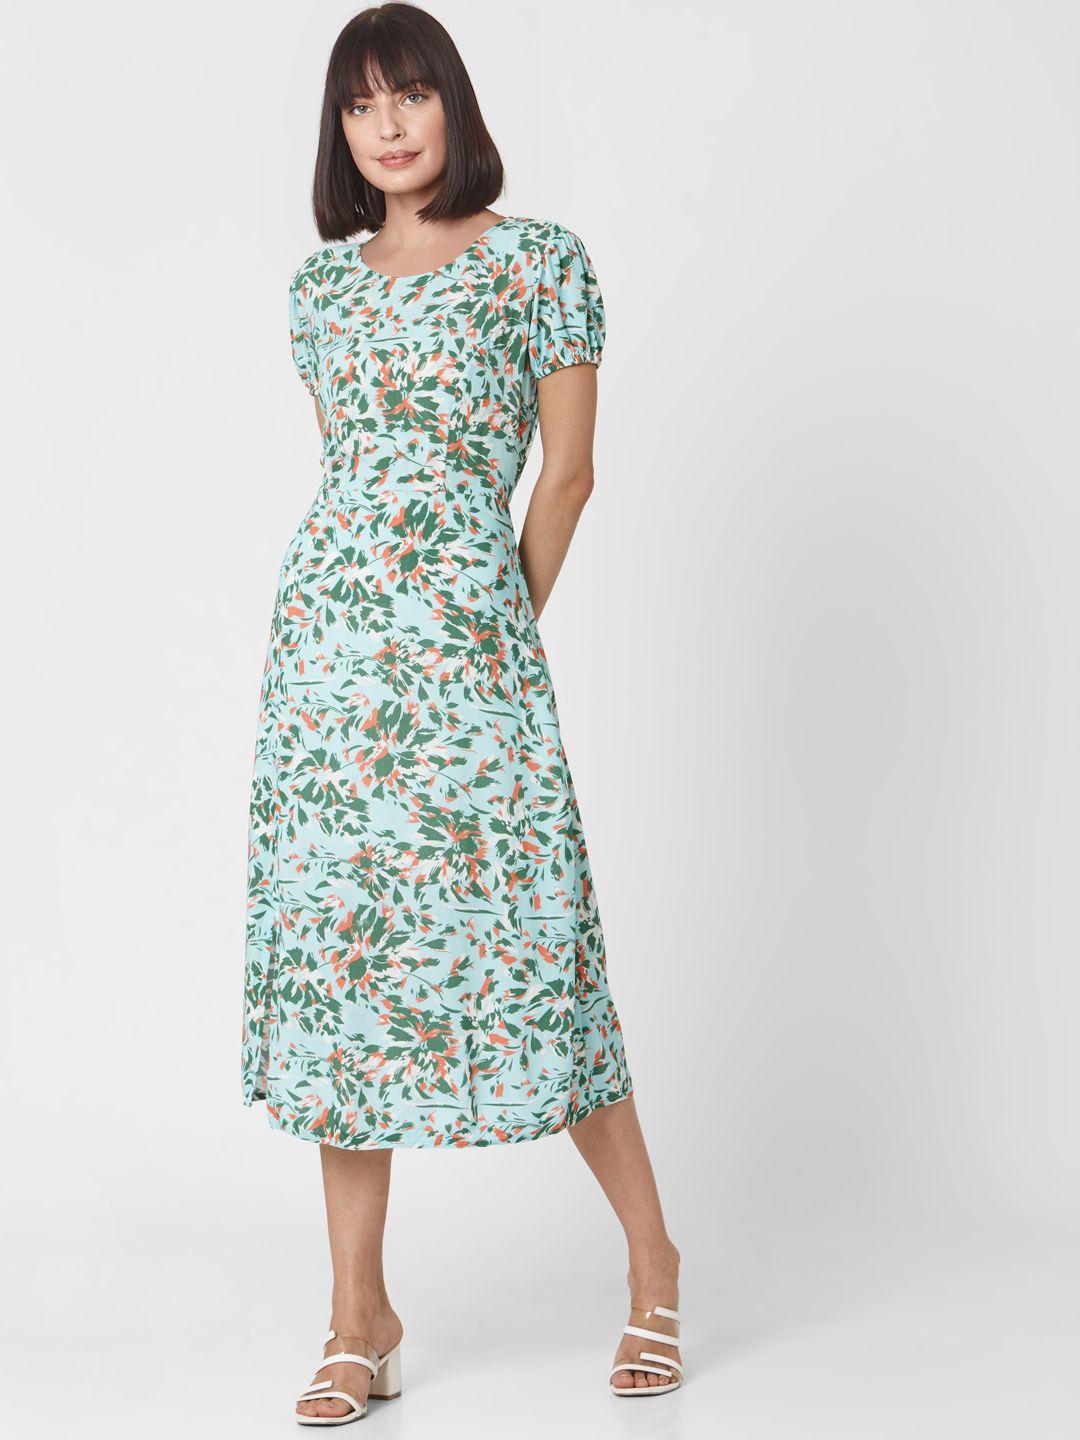 vero moda blue & green floral print cut-outs sheath midi dress with side slits